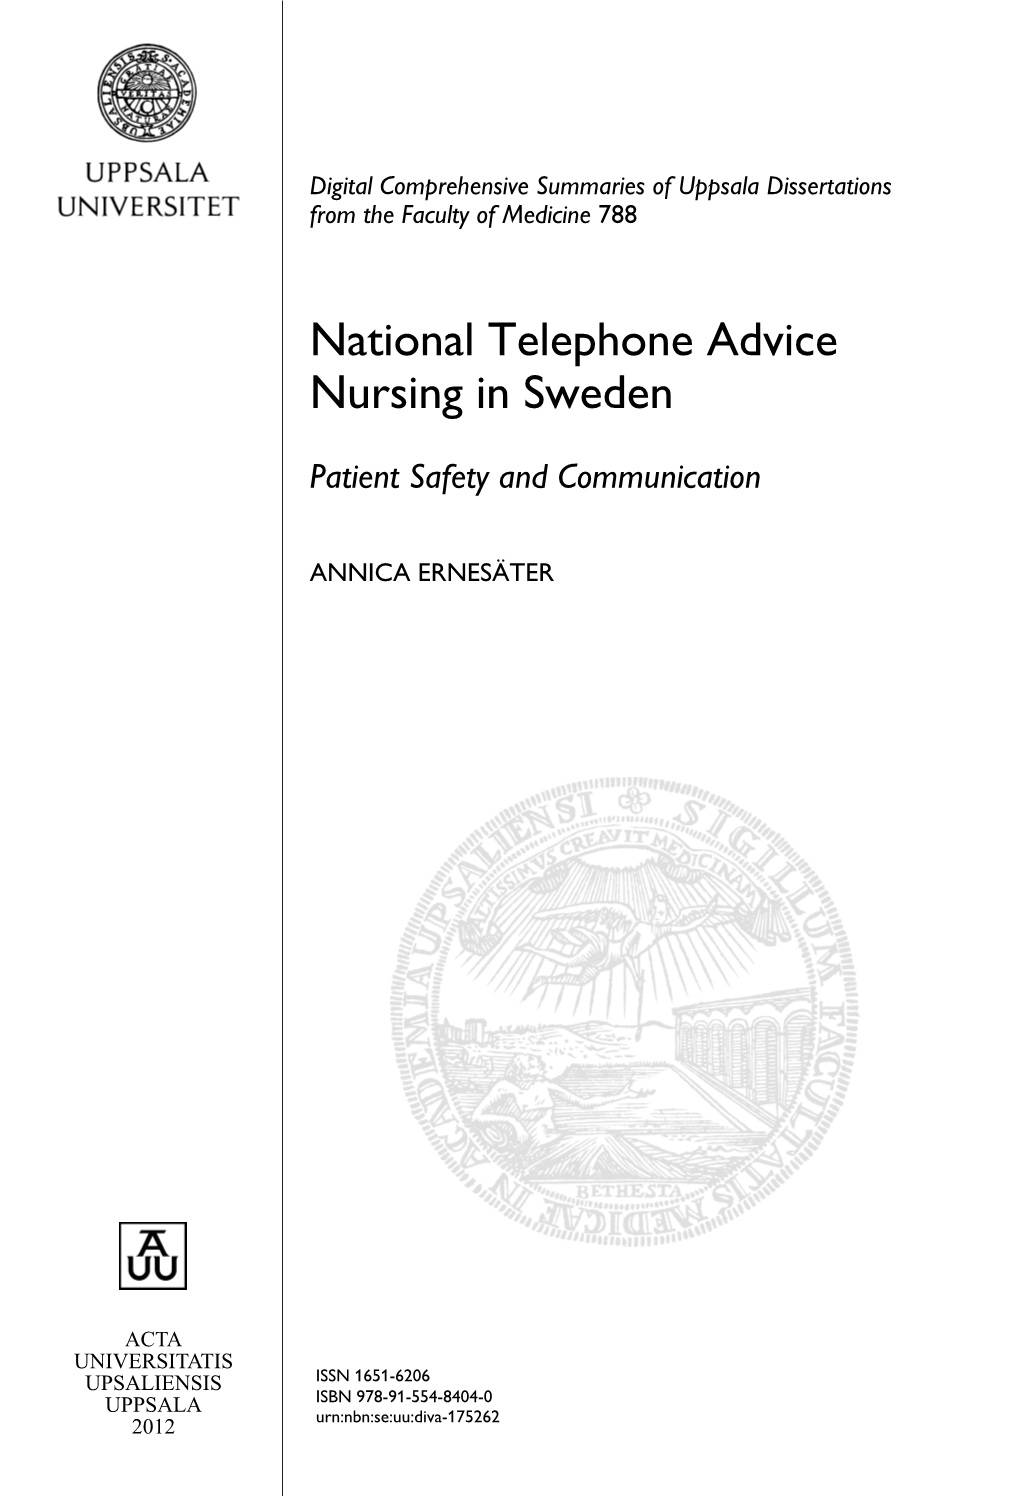 National Telephone Advice Nursing in Sweden